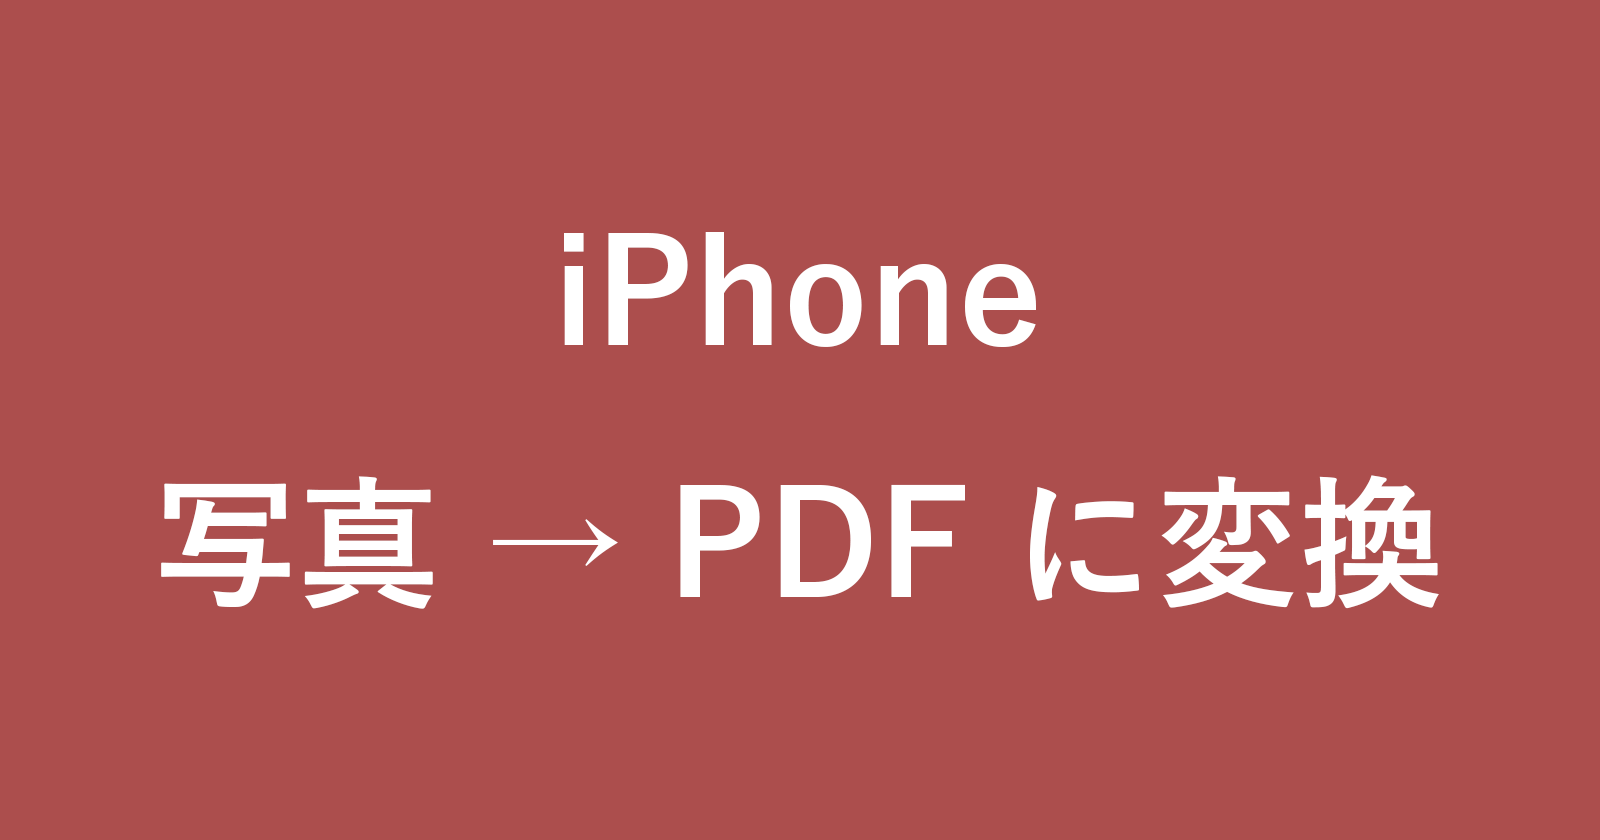 iphone convert image to pdf